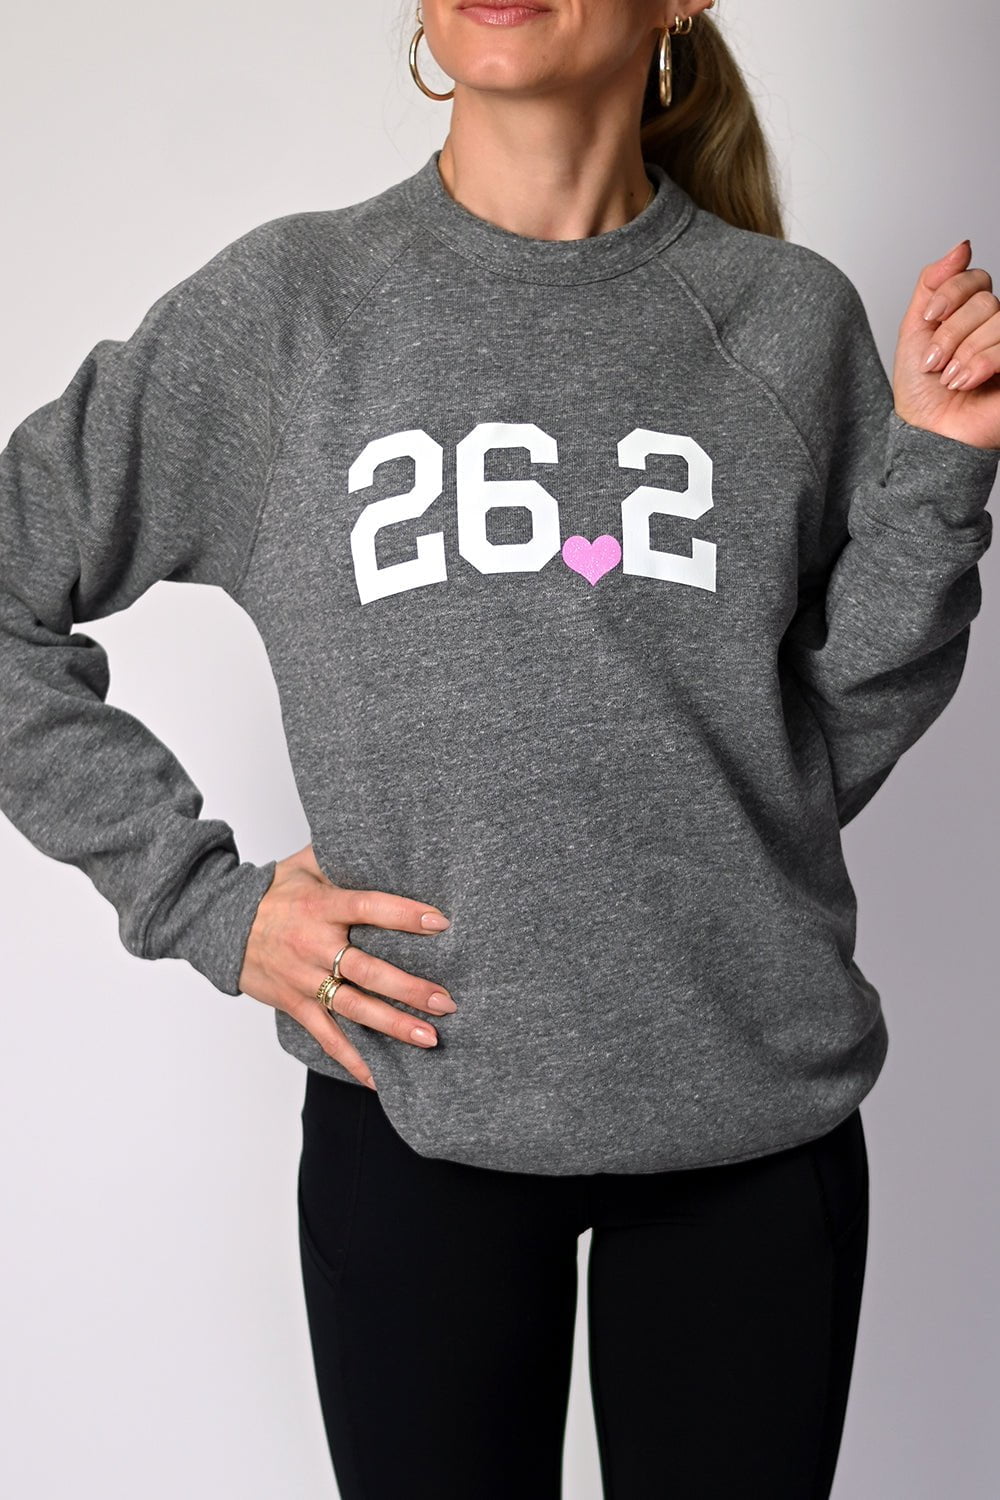 26.2 Heart Marathon Sweatshirt